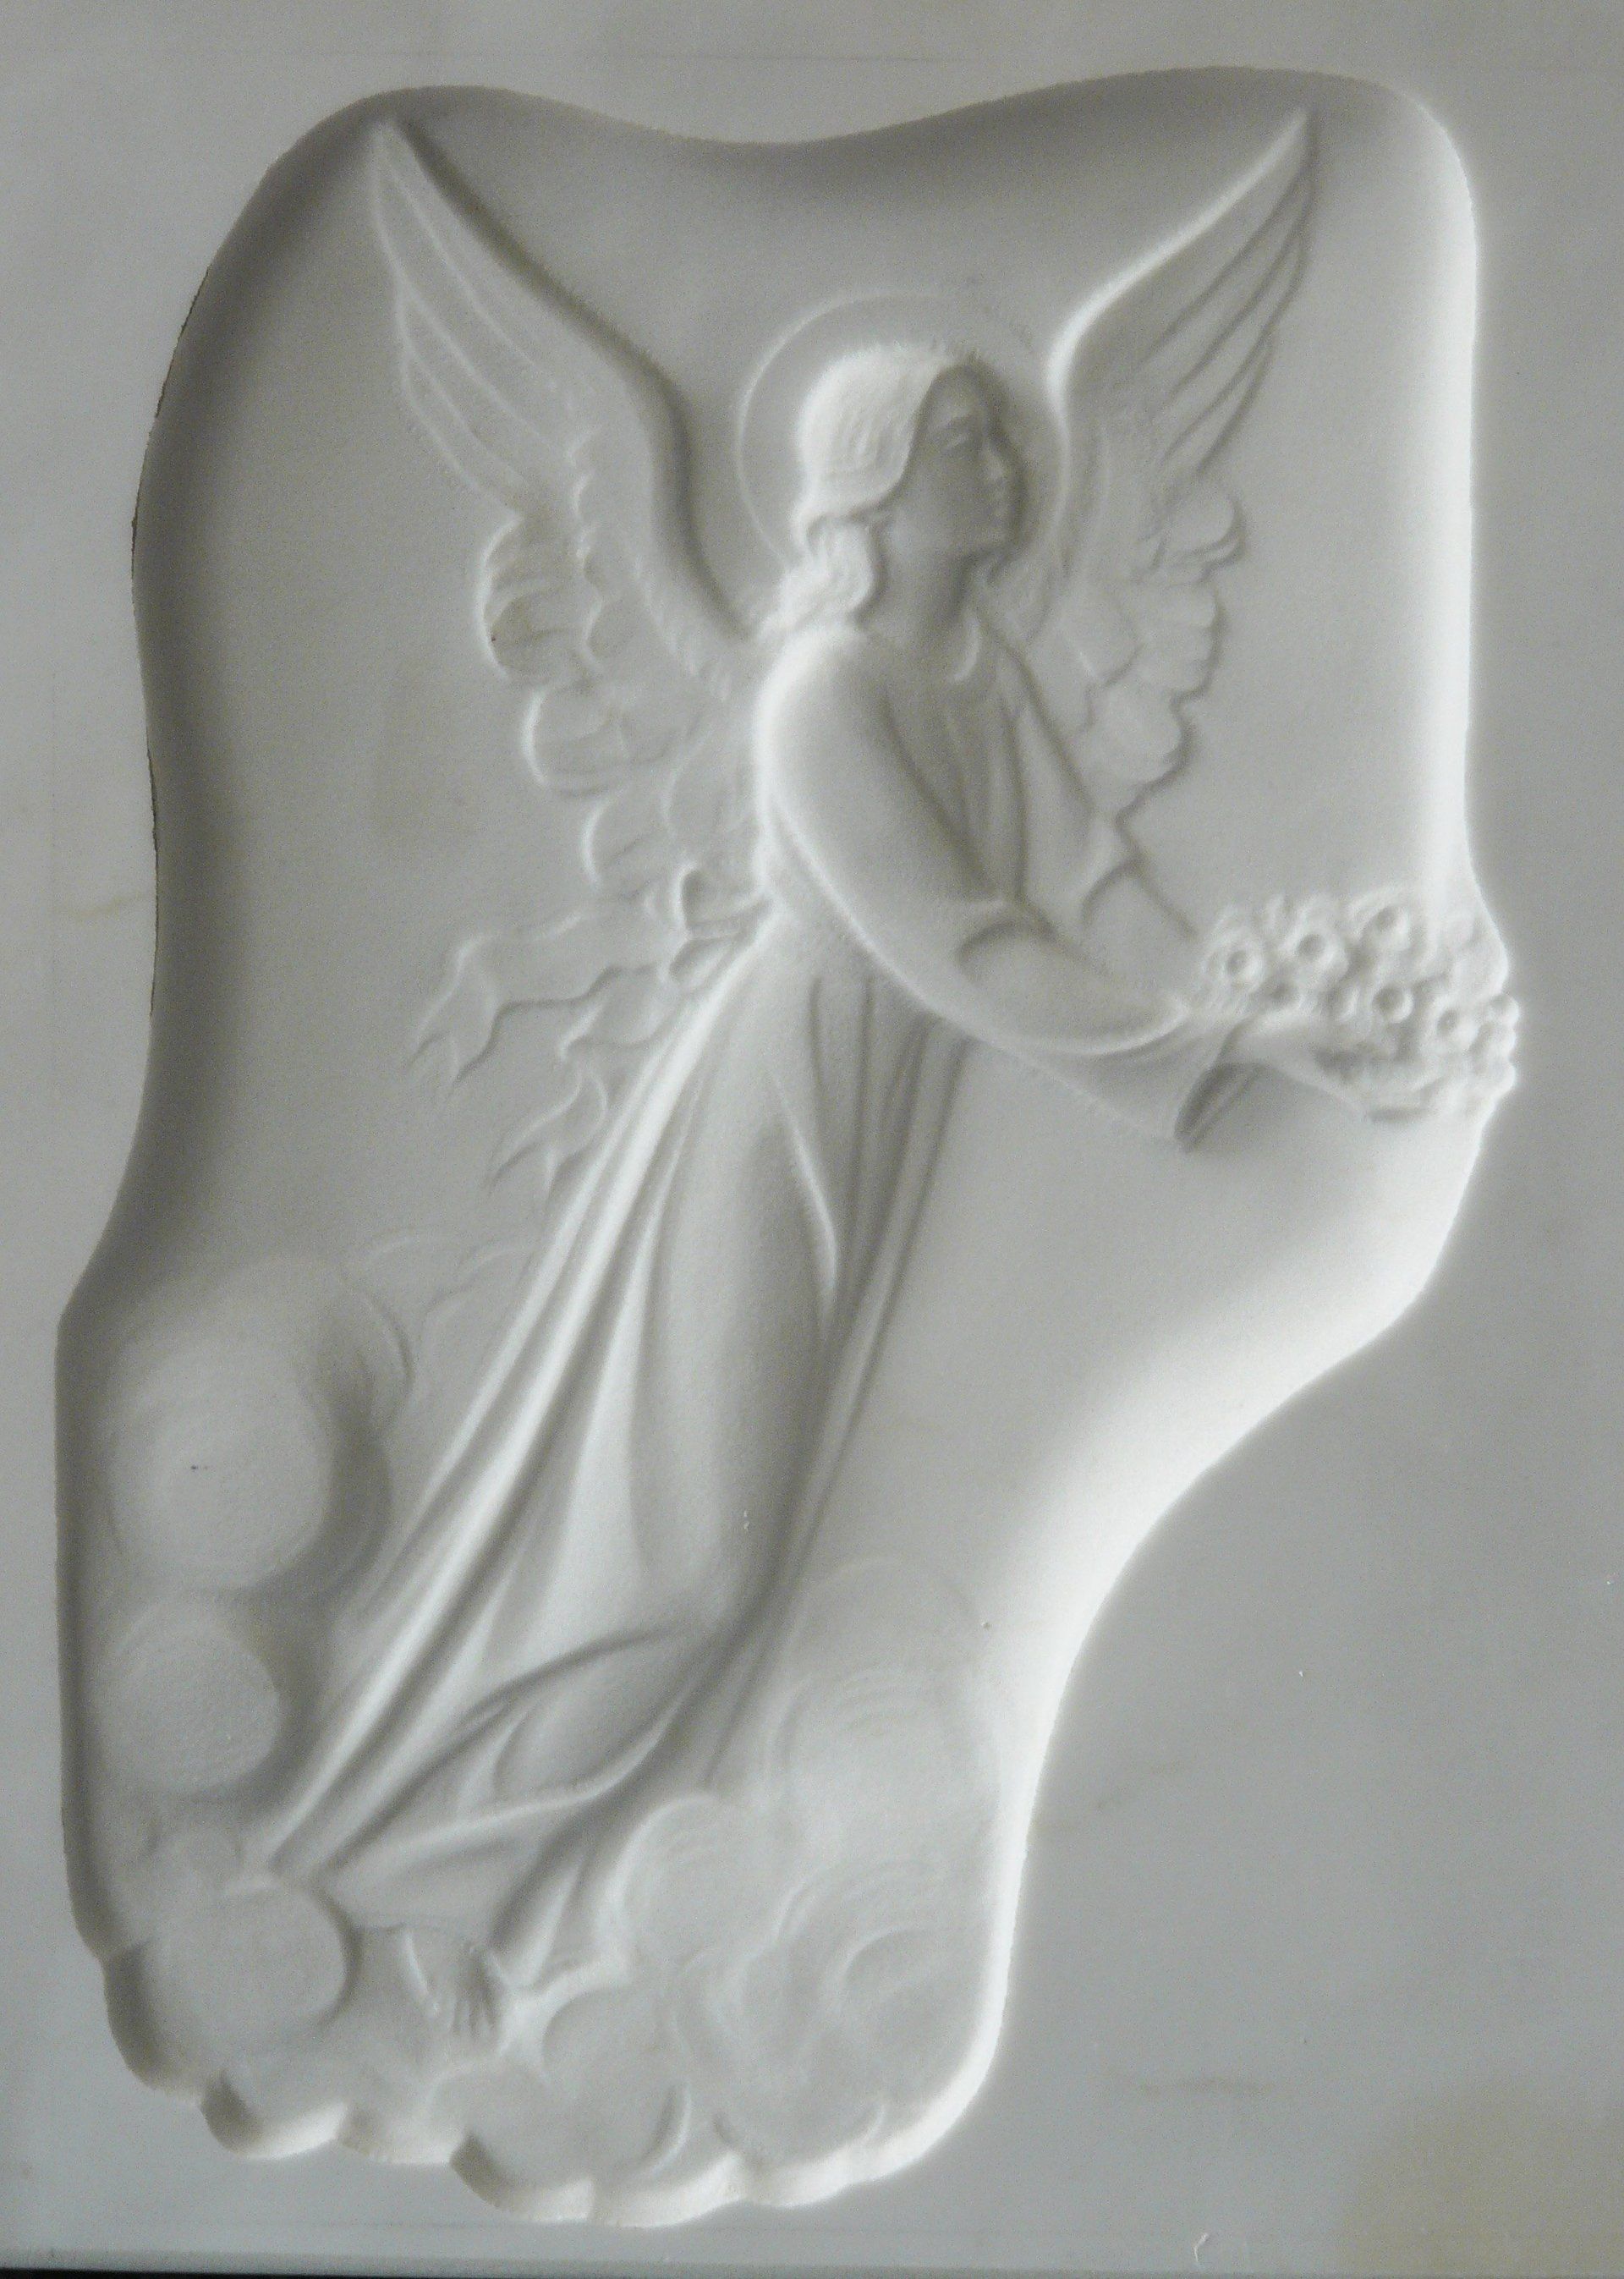 bassorilievo su marmo bianco rappresentante una angelo